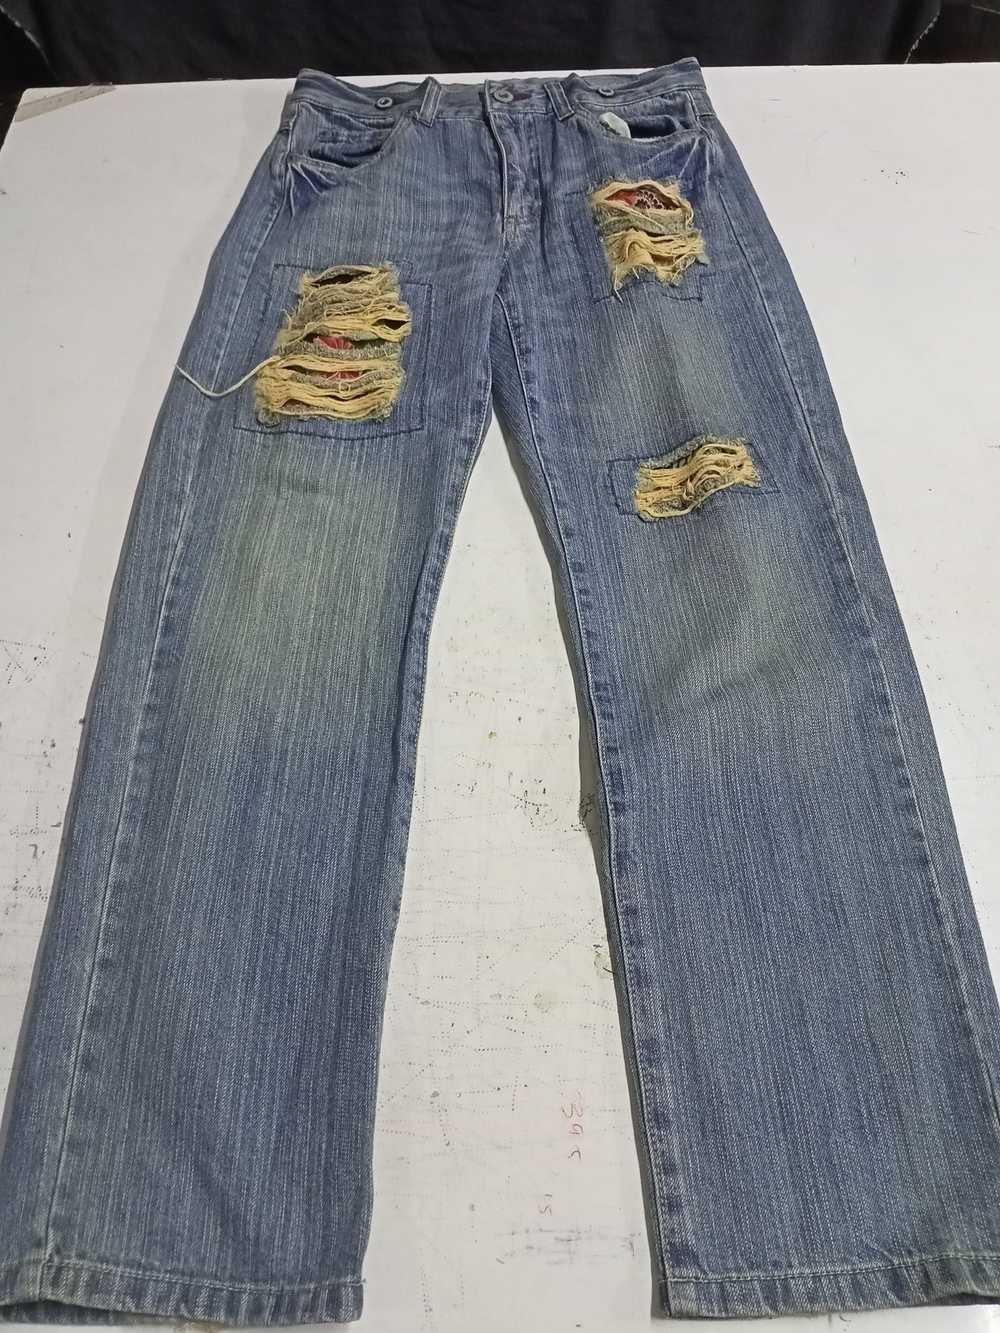 Distressed Denim Hig quality guaranteed jeans - image 2